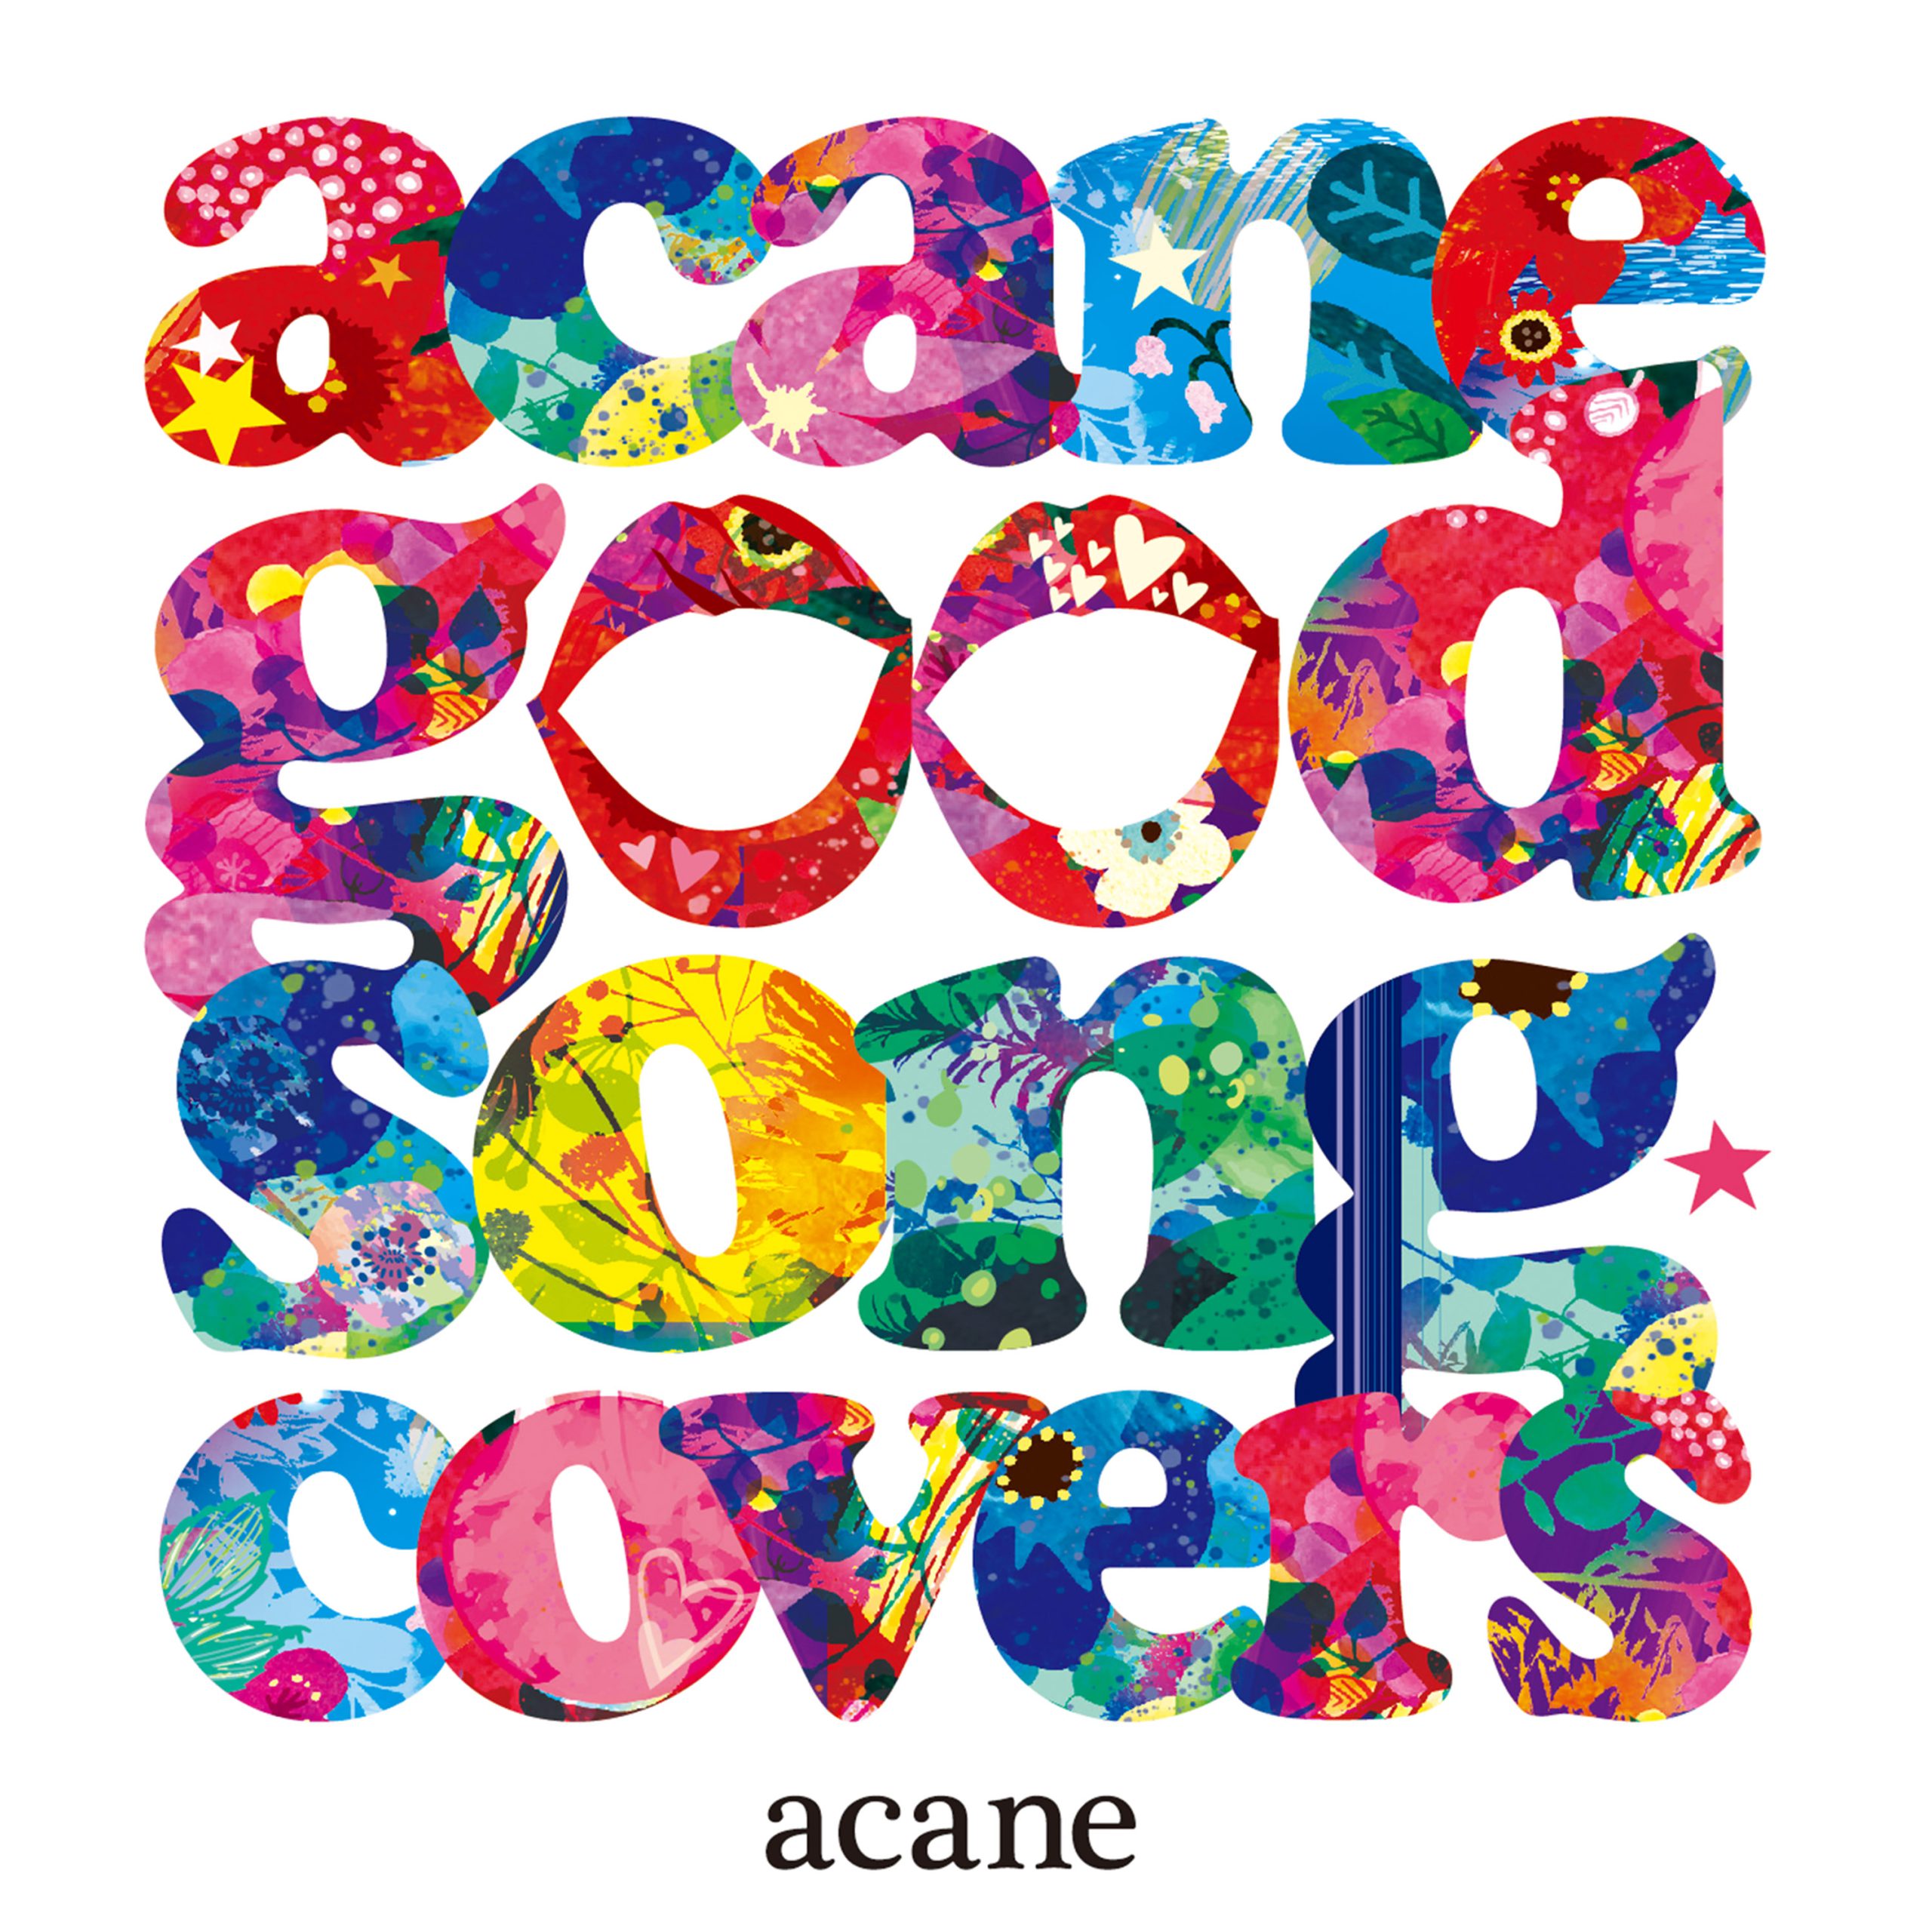 acane good song covers / acane